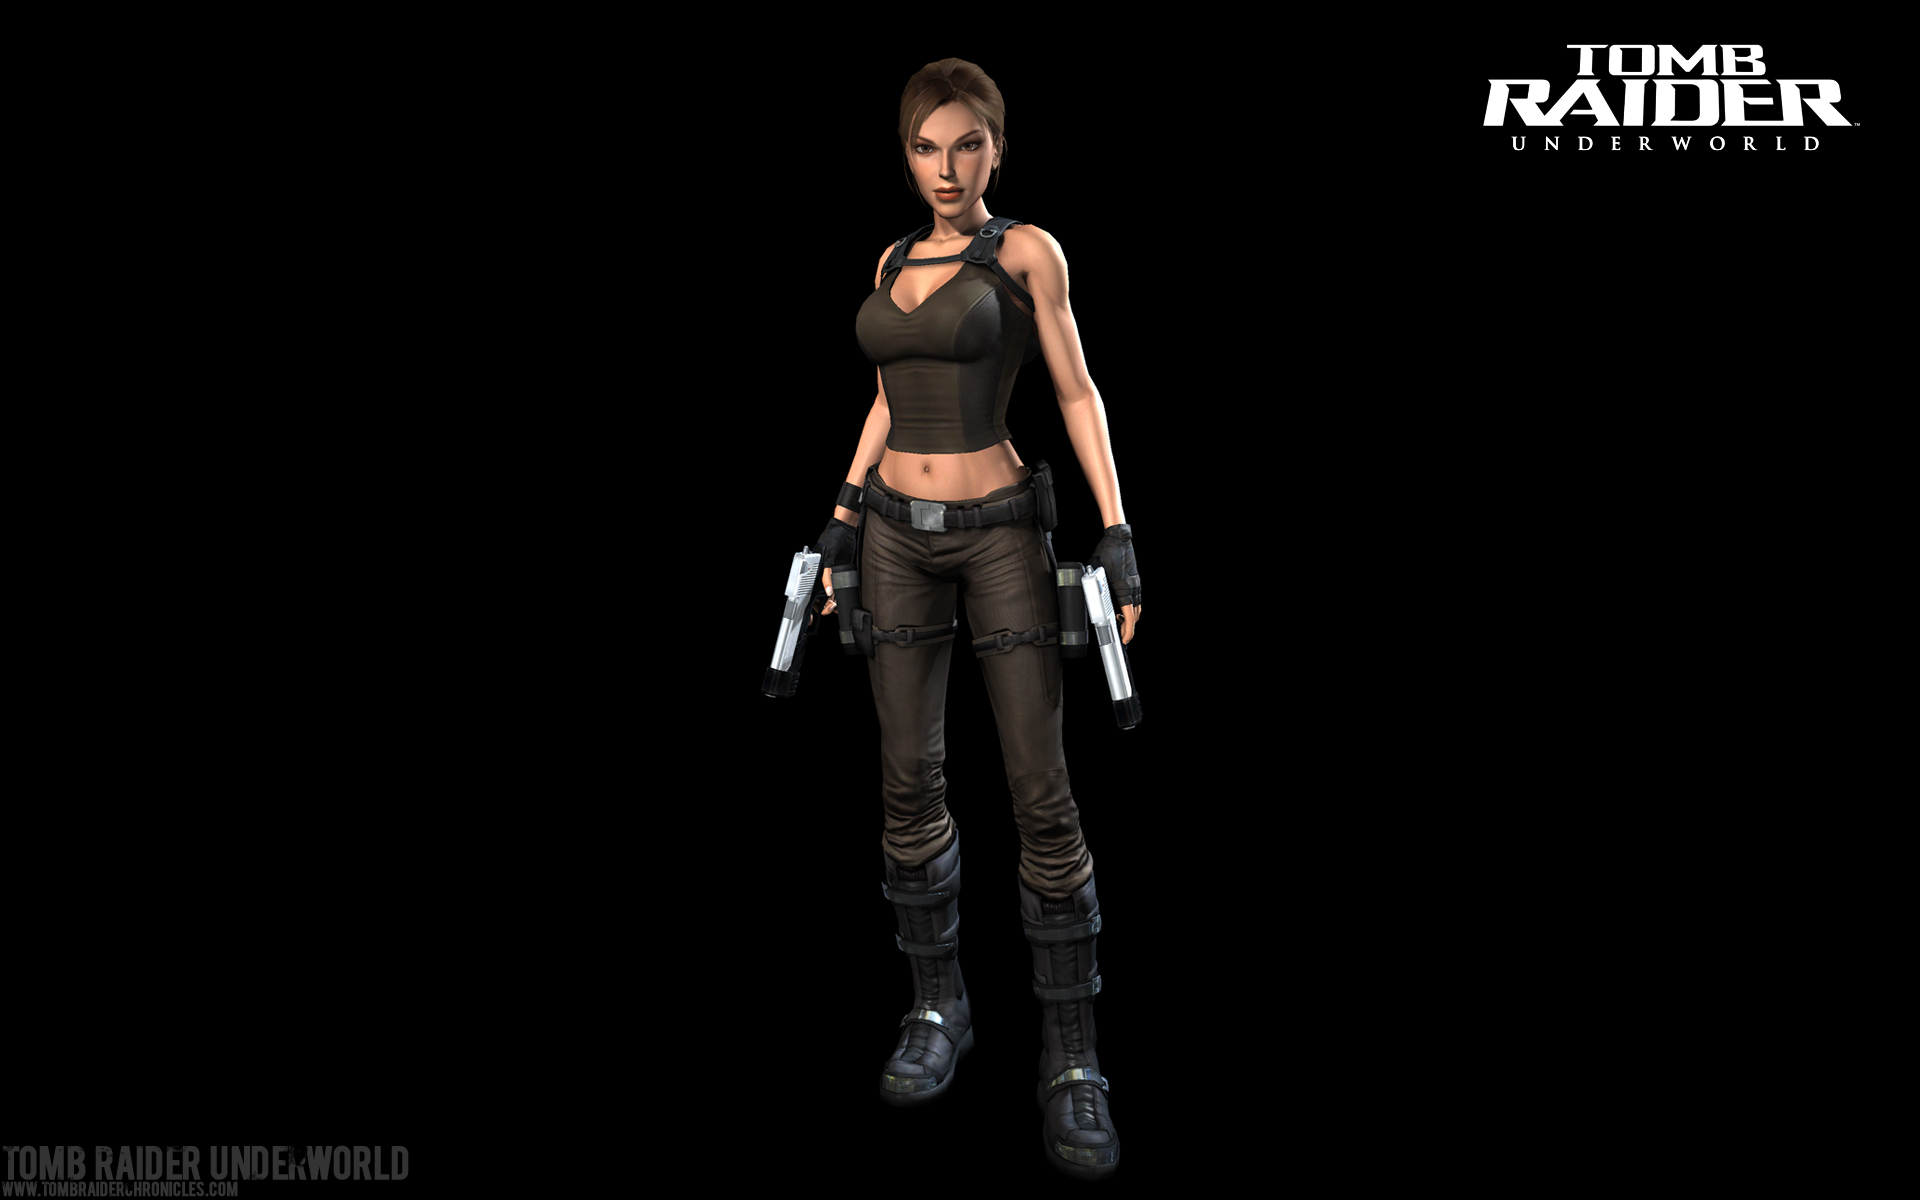 Video Game Tomb Raider: Underworld HD Wallpaper | Background Image